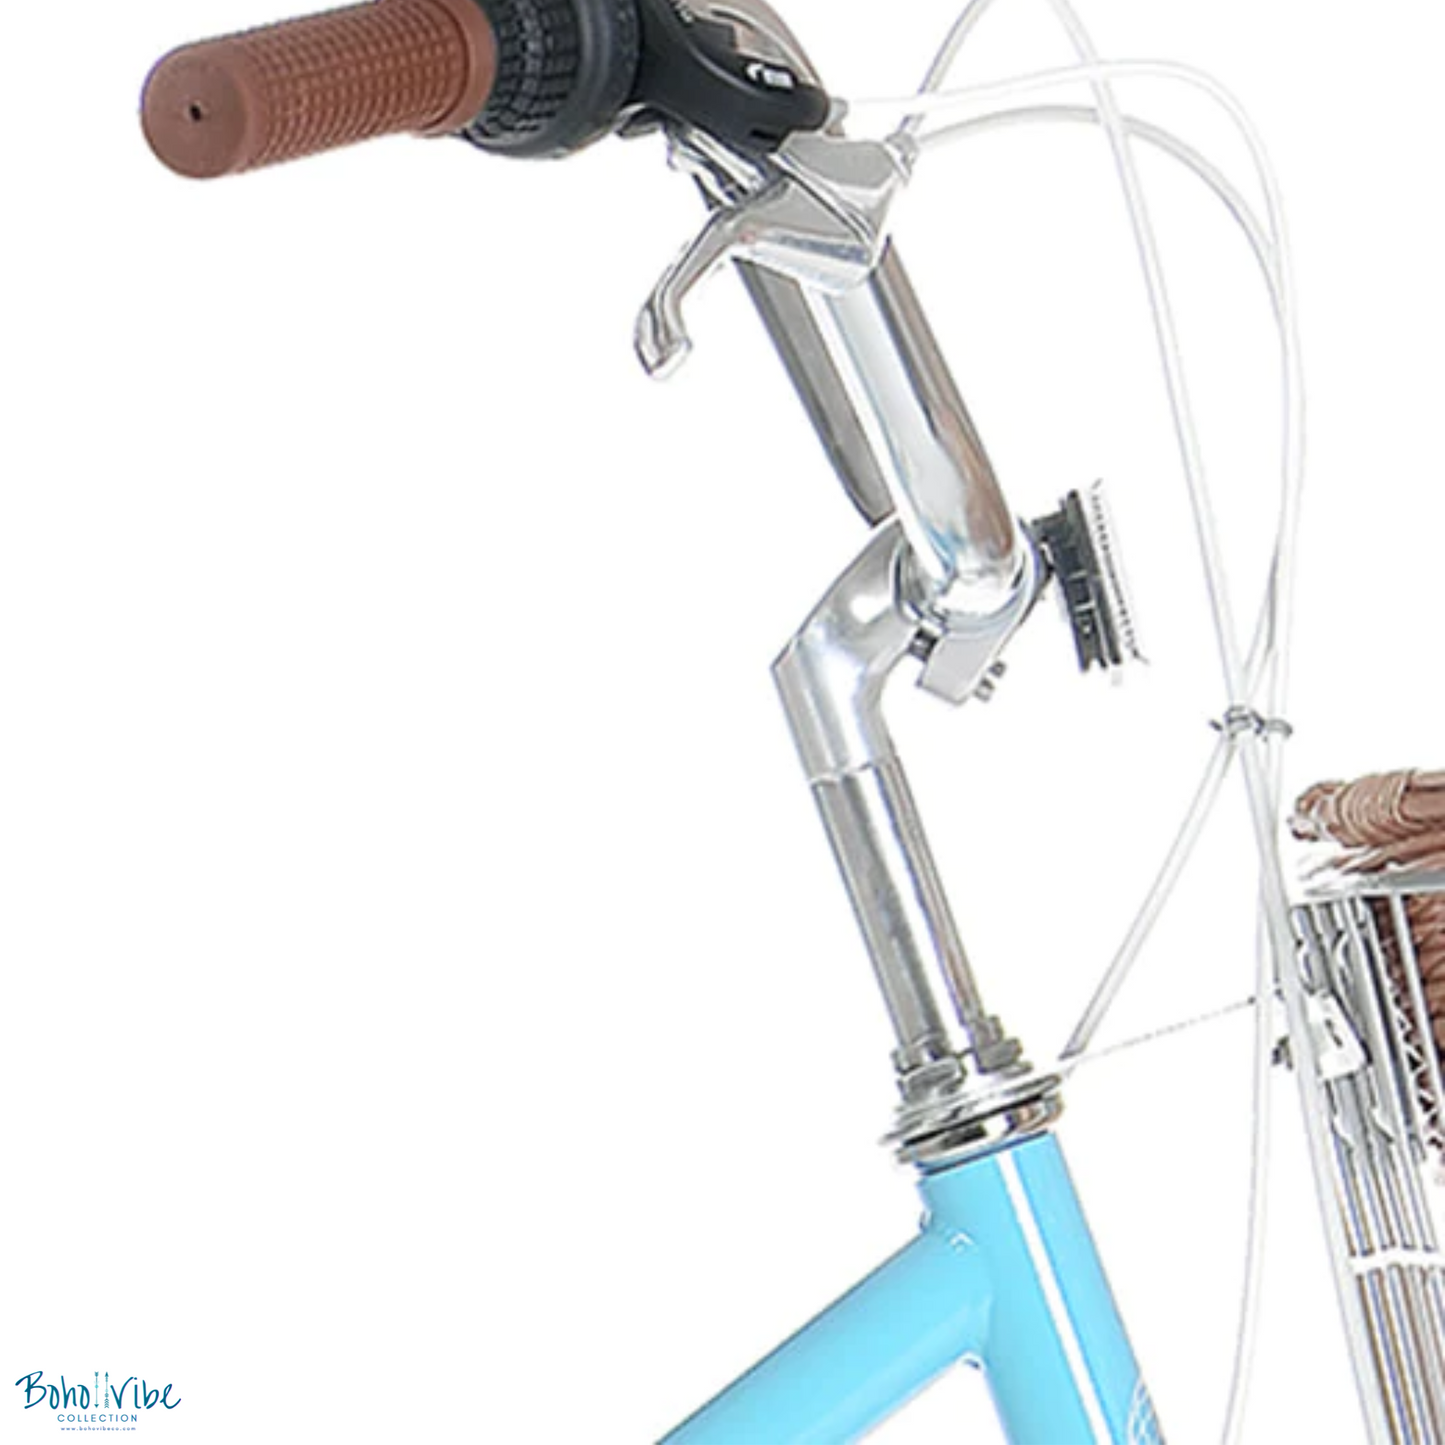 Boho ↡↟ Vibe Collection ↠  Vintage Cruiser Progear Pomona Coastal Commuter Bike Blue Ladies Teen 15" with Basket 